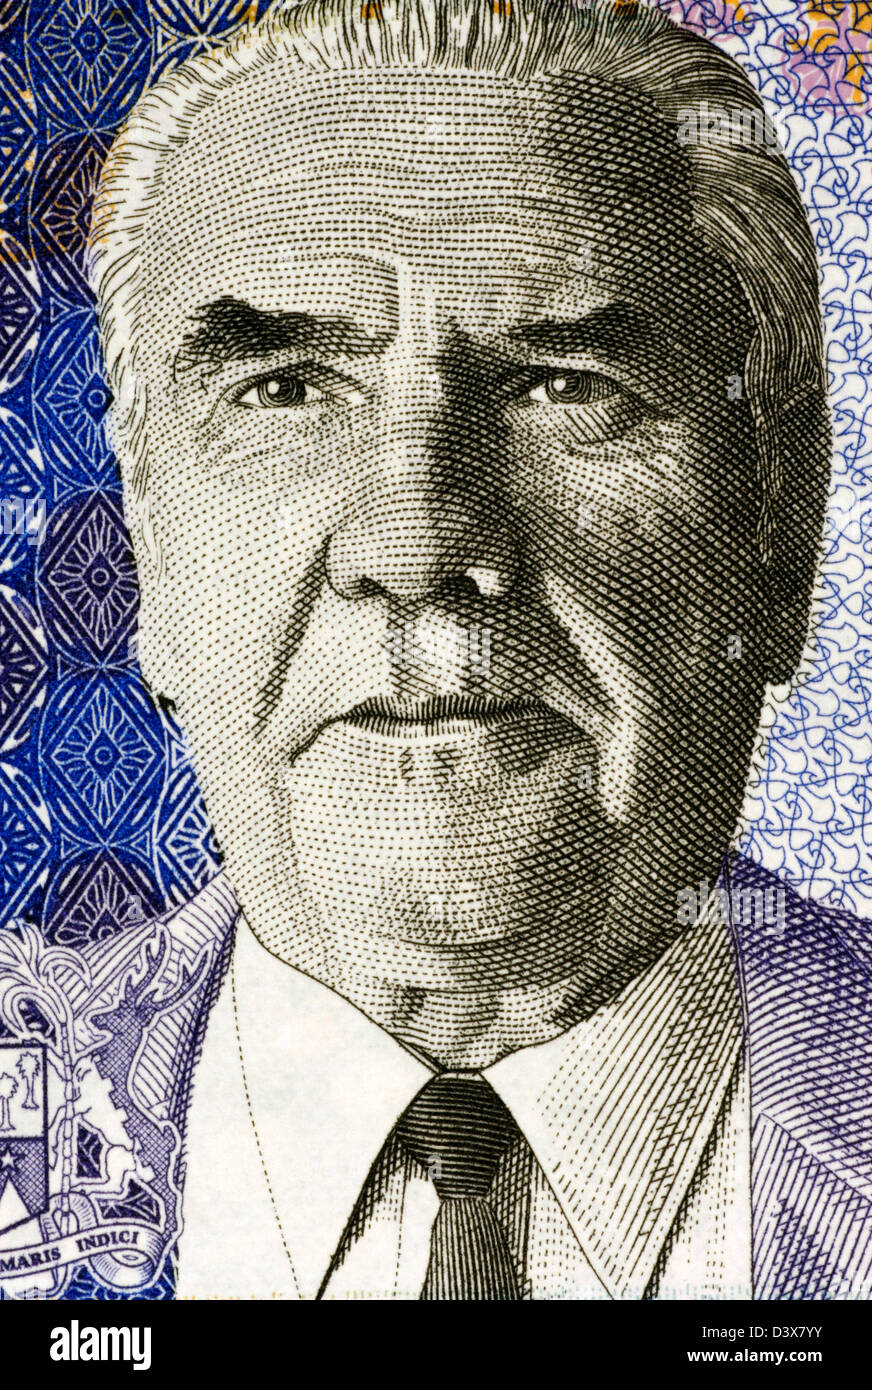 Joseph Maurice Paturau auf 50 Rupien 2009 Banknote aus Mauritius. Stockfoto